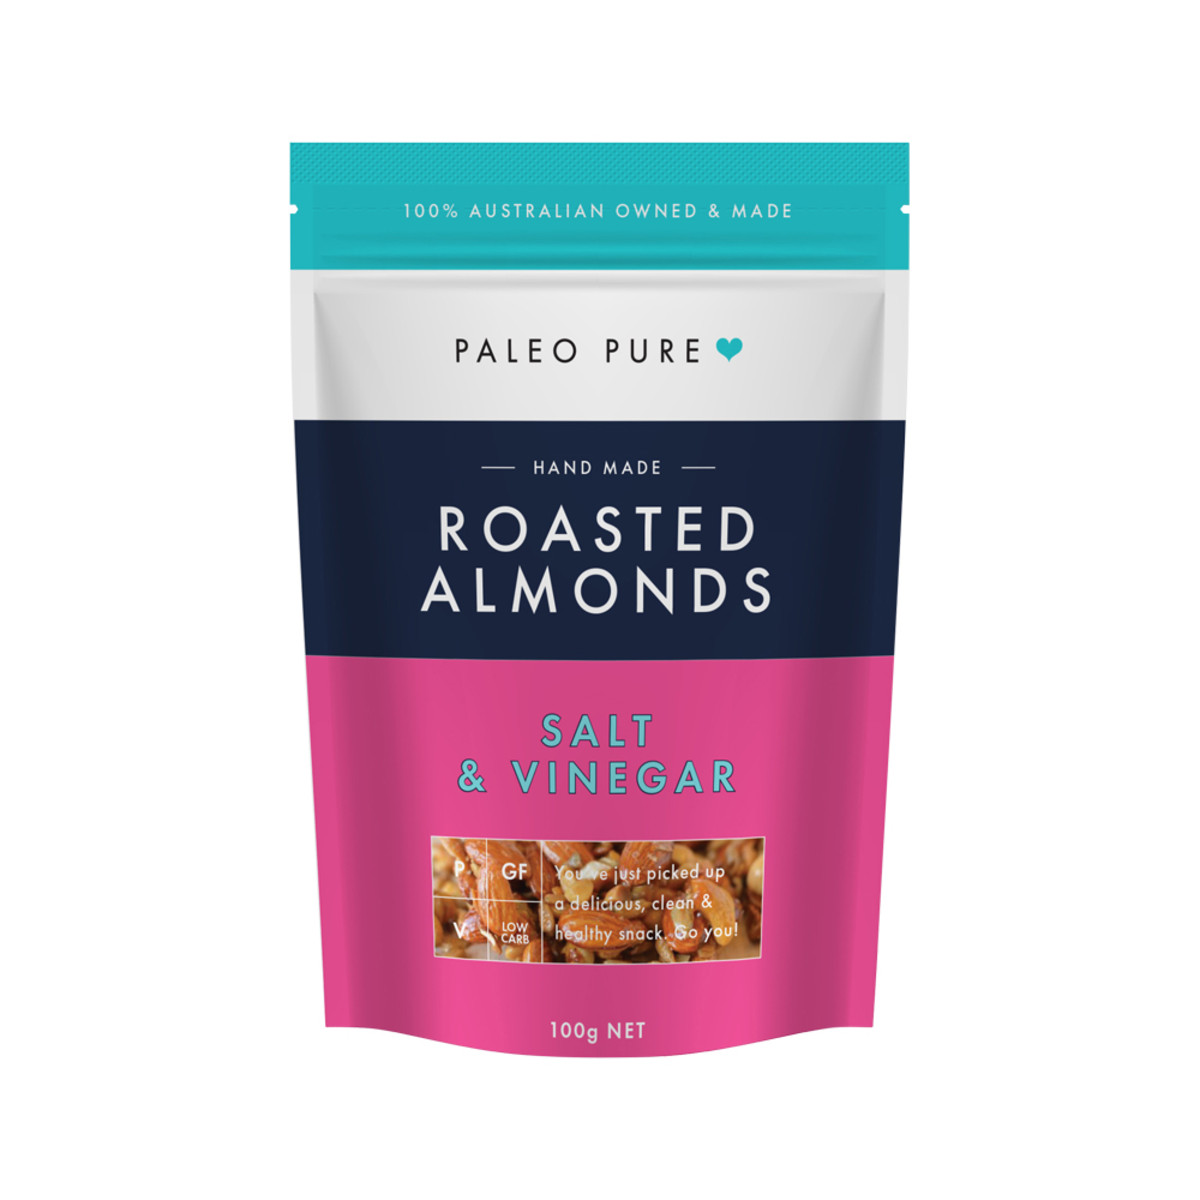 PALEO PURE - Roasted Almonds Salt & Vinegar